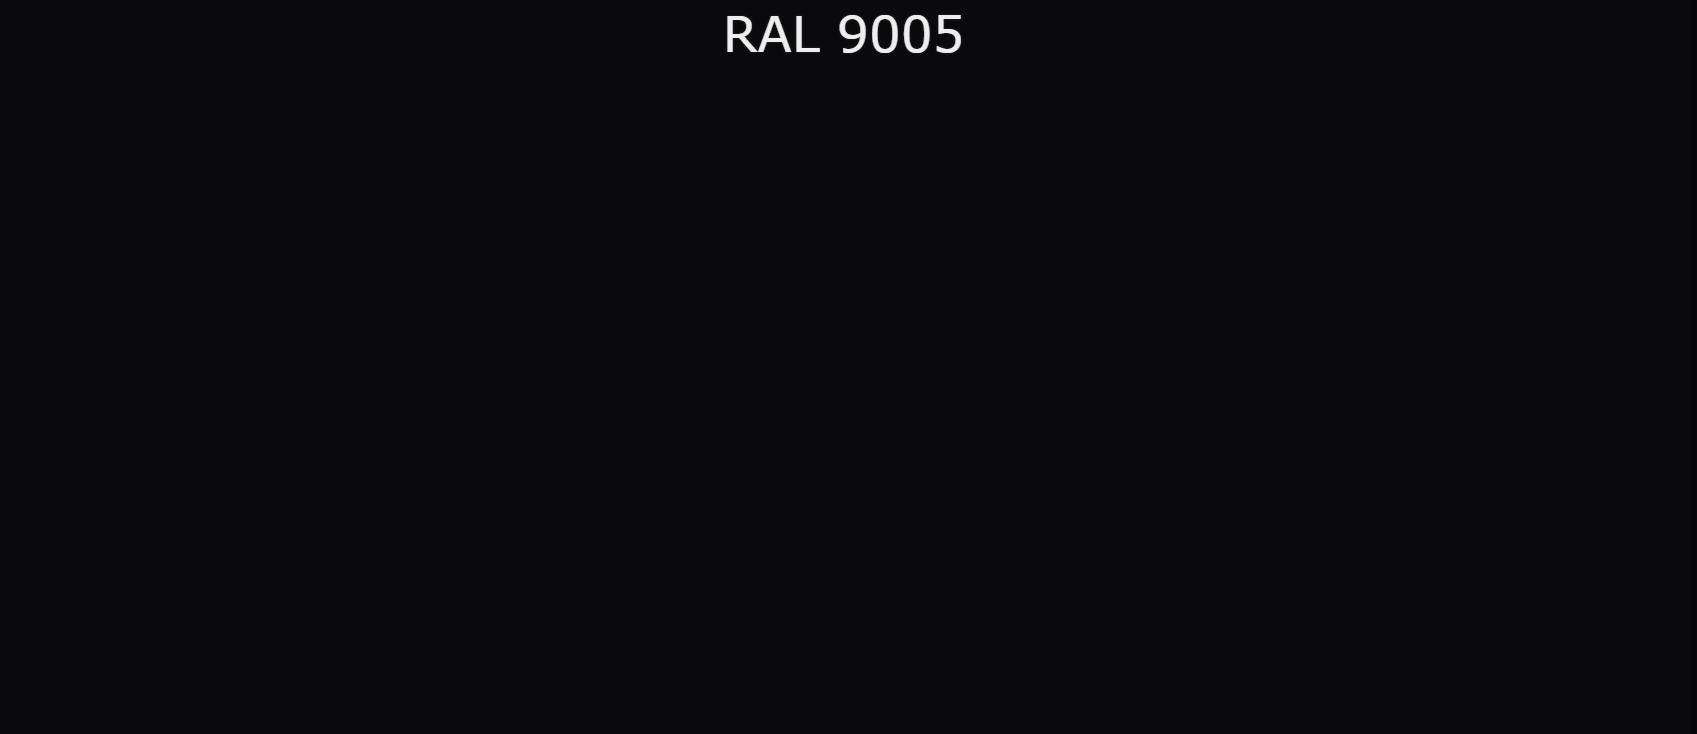 Van9005. Рал 9005 черный янтарь. Цвет RAL 9005 черный янтарь. Черный цвет по RAL 9005. Черный цвет RAL 9005.